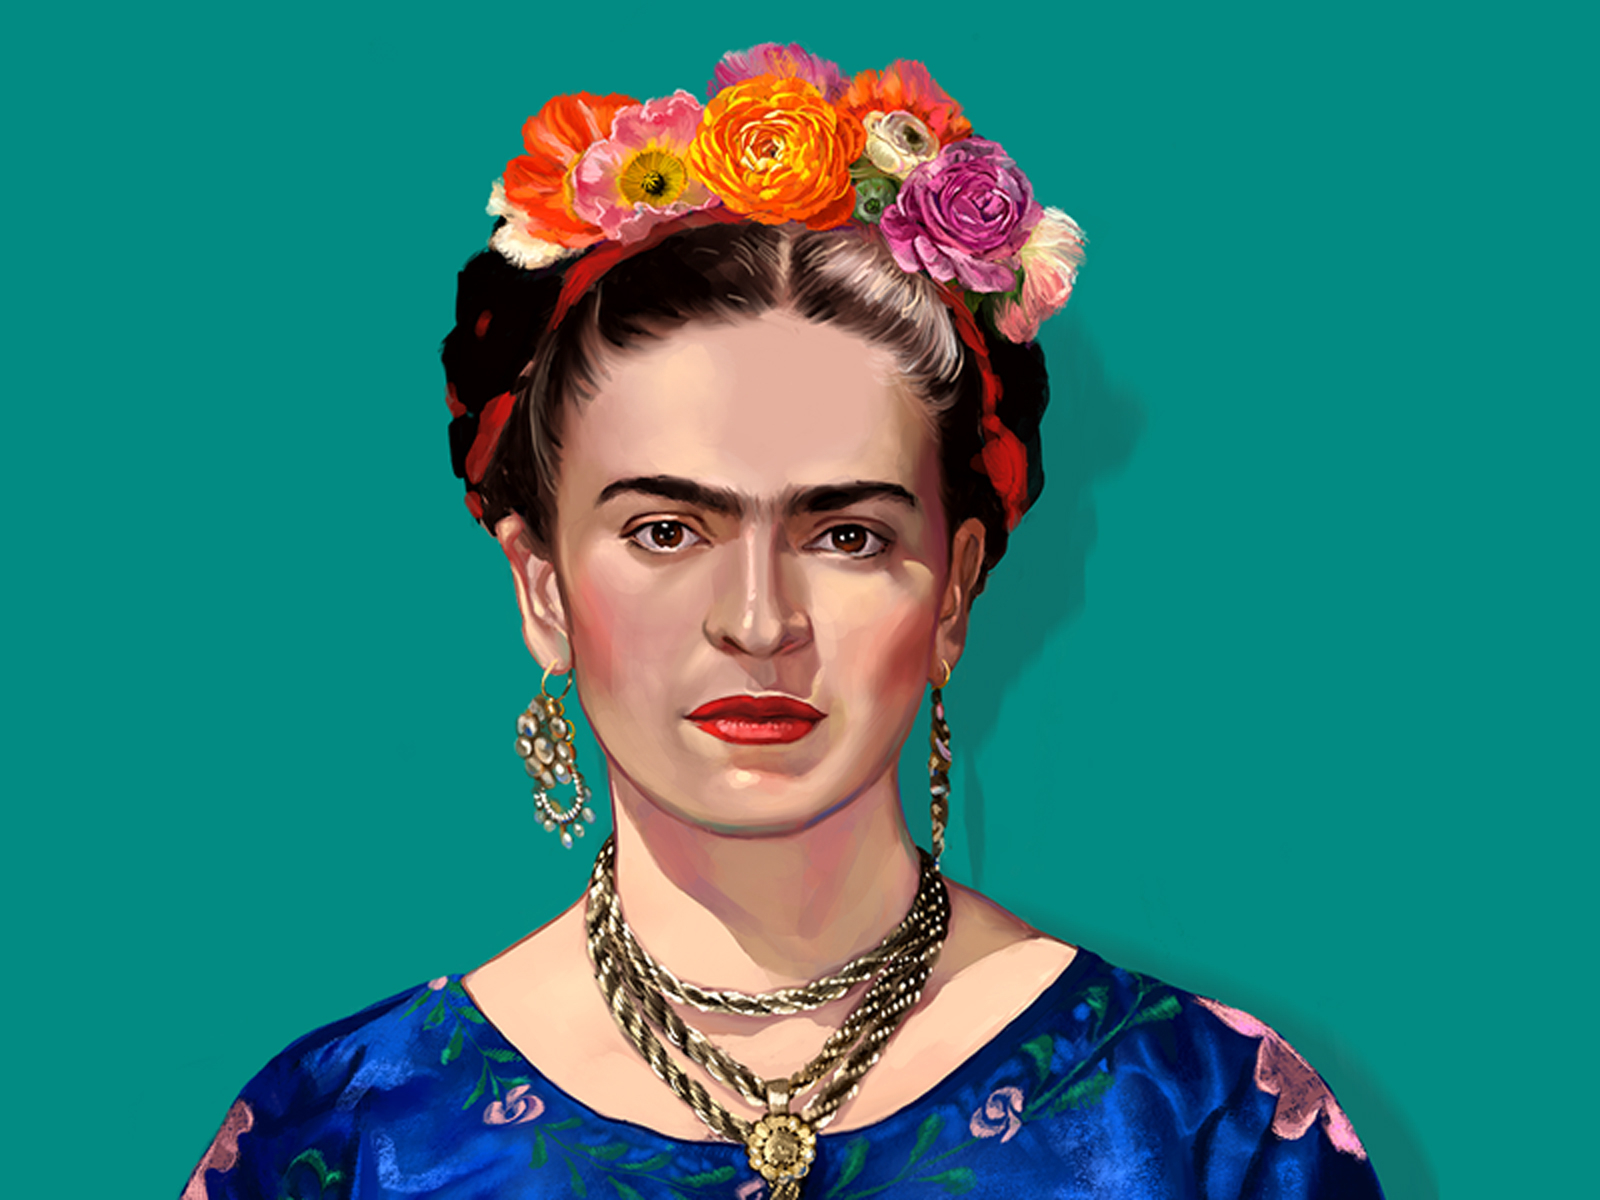 Digital Drawing of Frida Kahlo by Nimmy Melvin for Emm & Enn on Dribbble